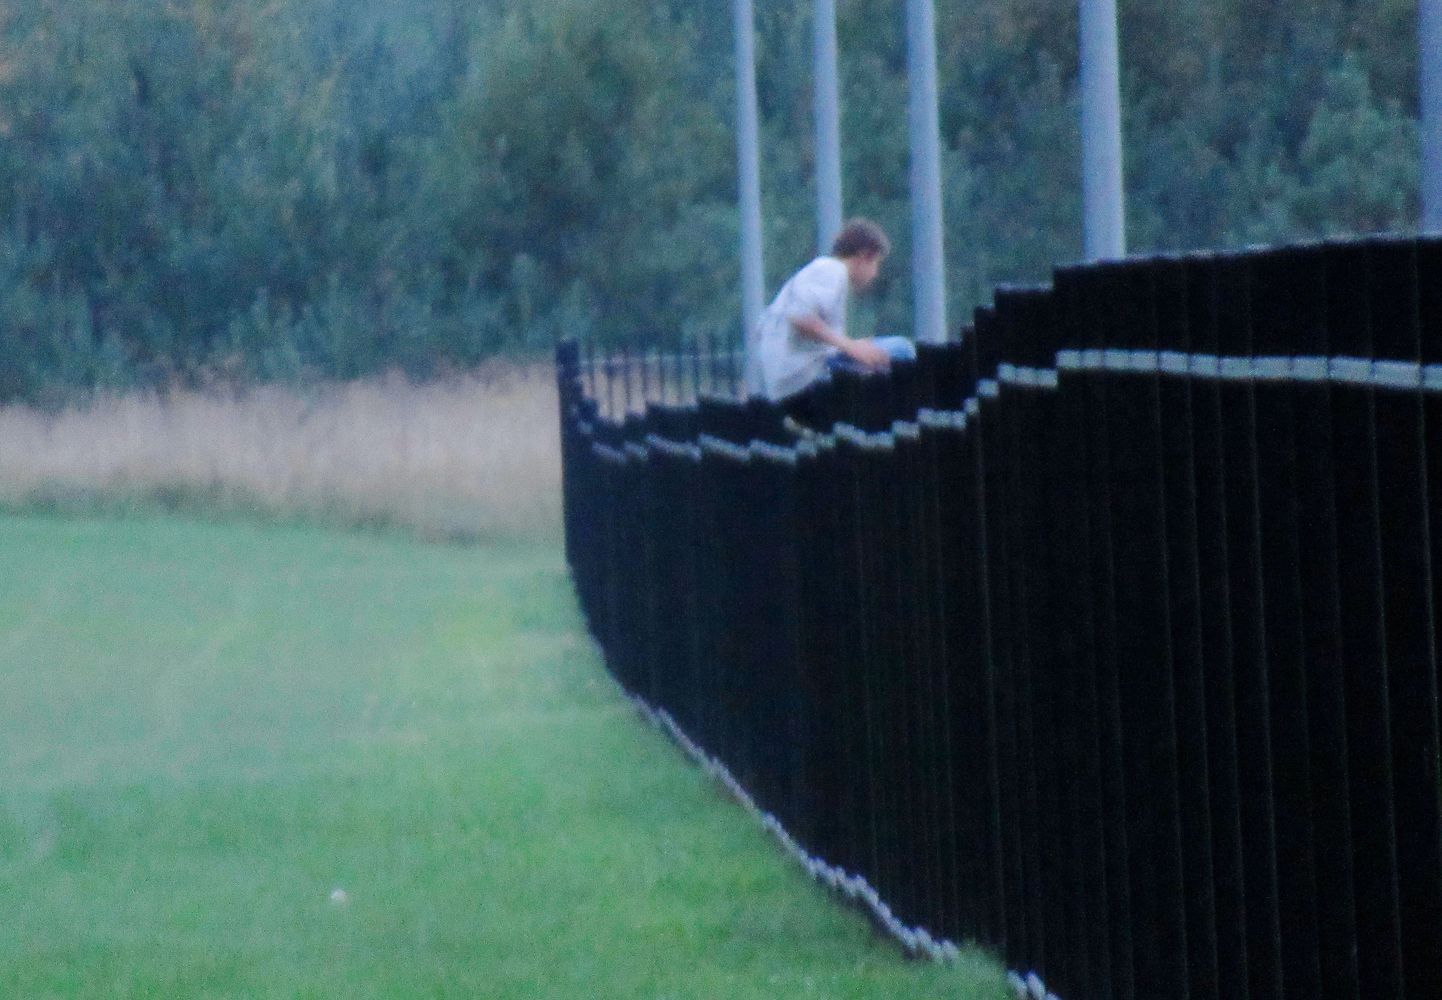 Воспитанник школы лезет через забор прямо на глазах у журналиста Postimees.